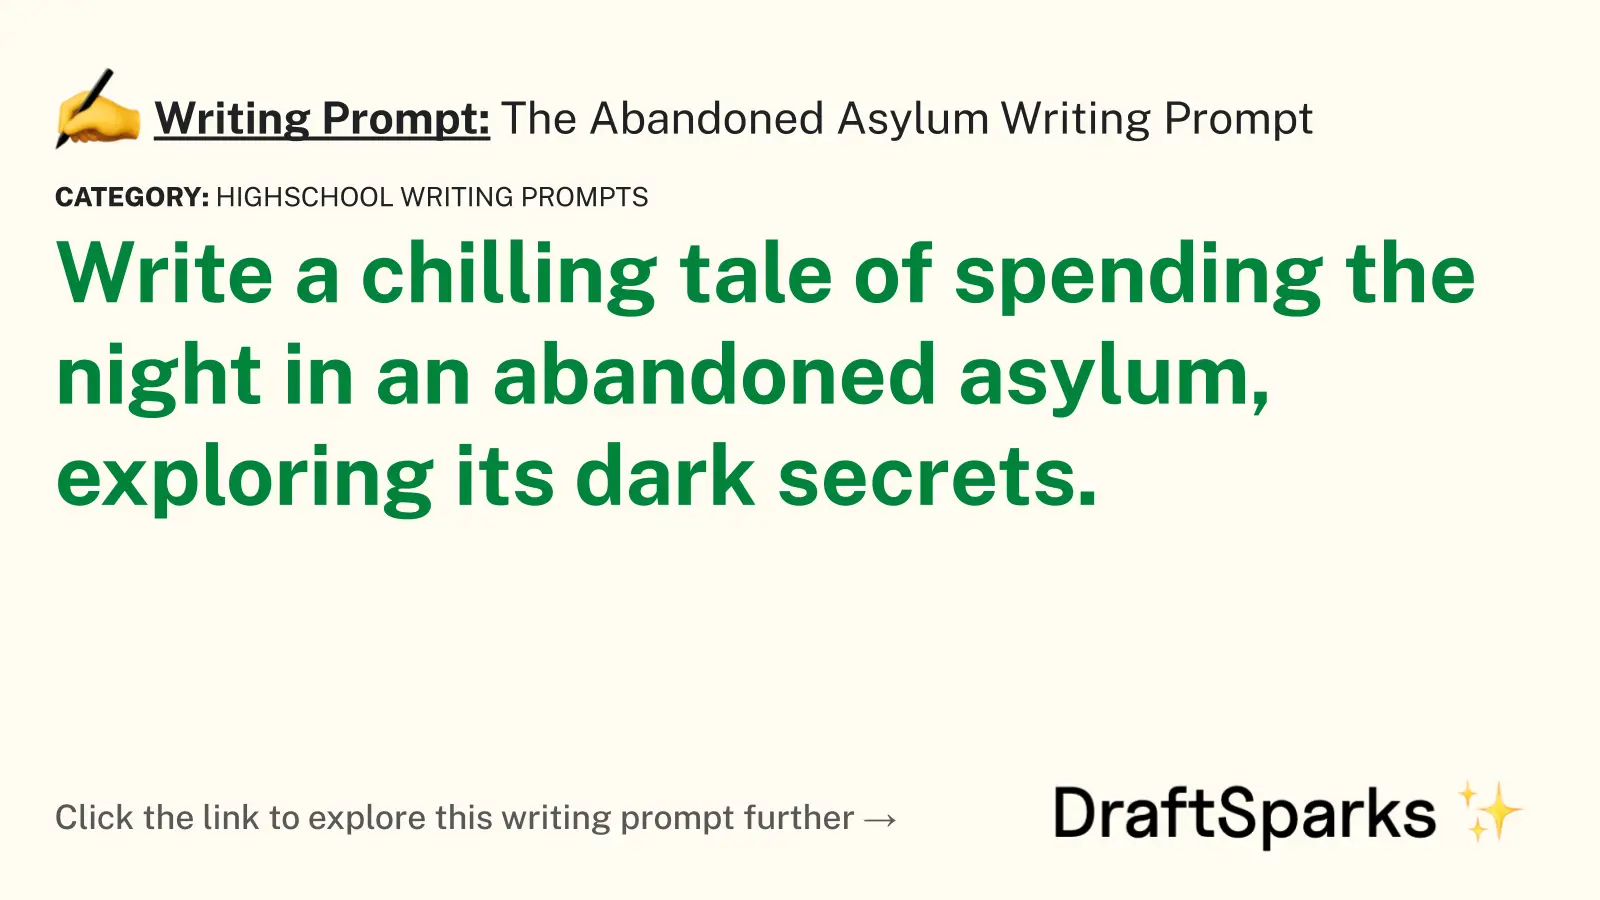 The Abandoned Asylum Writing Prompt